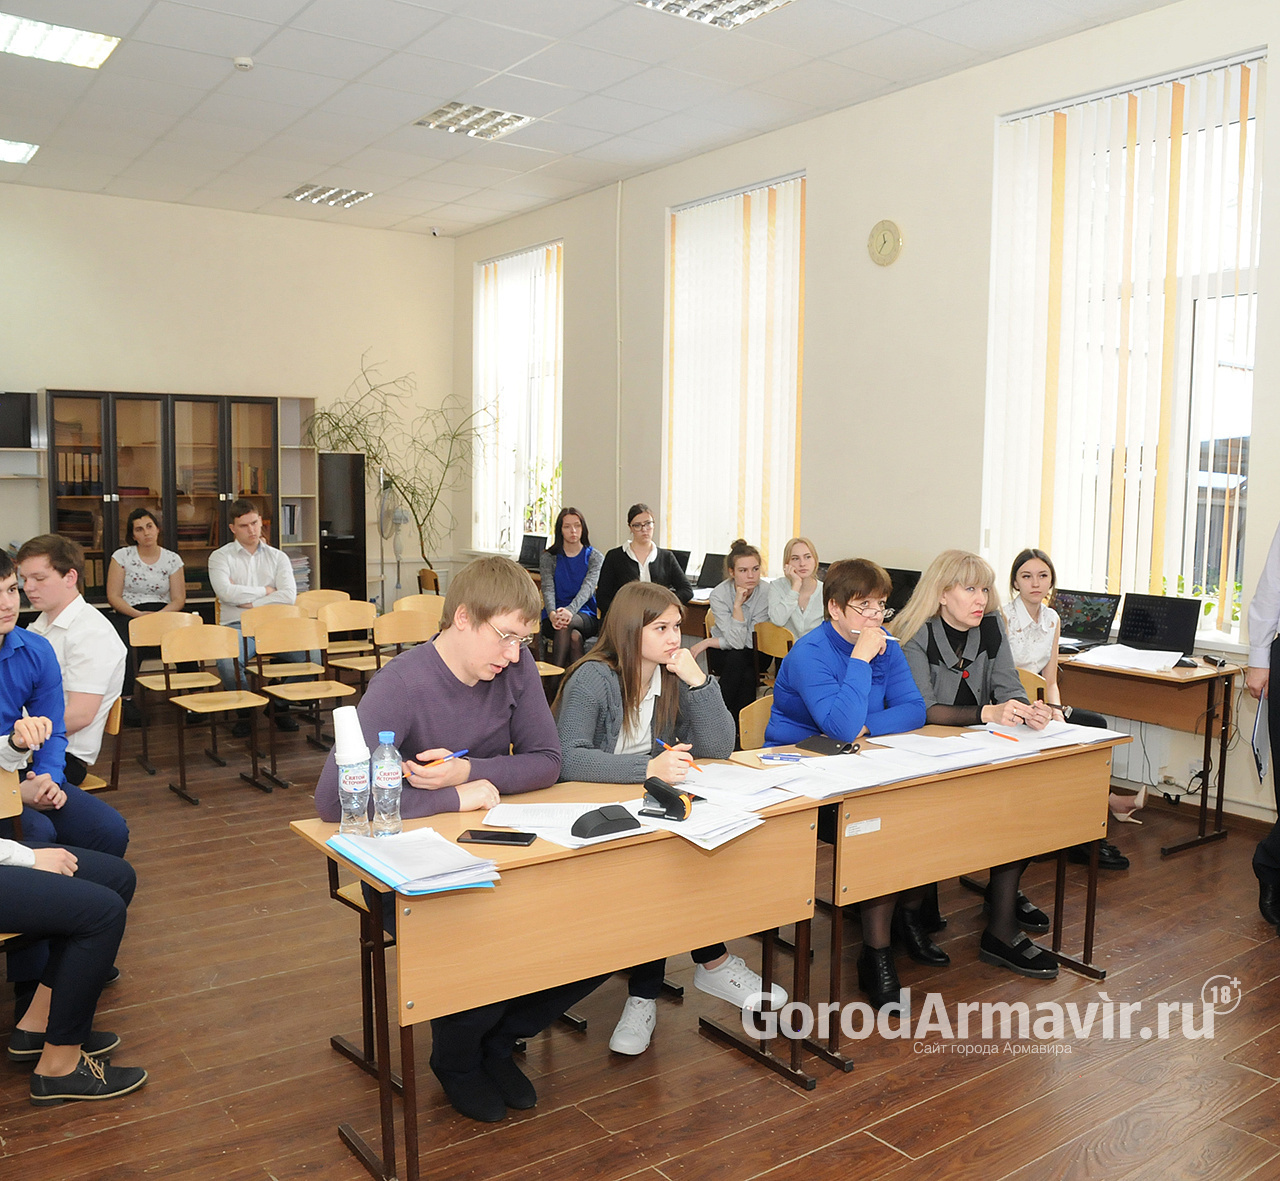 Армавирские студенты прошли аттестацию по стандартам Ворлдскиллс Россия